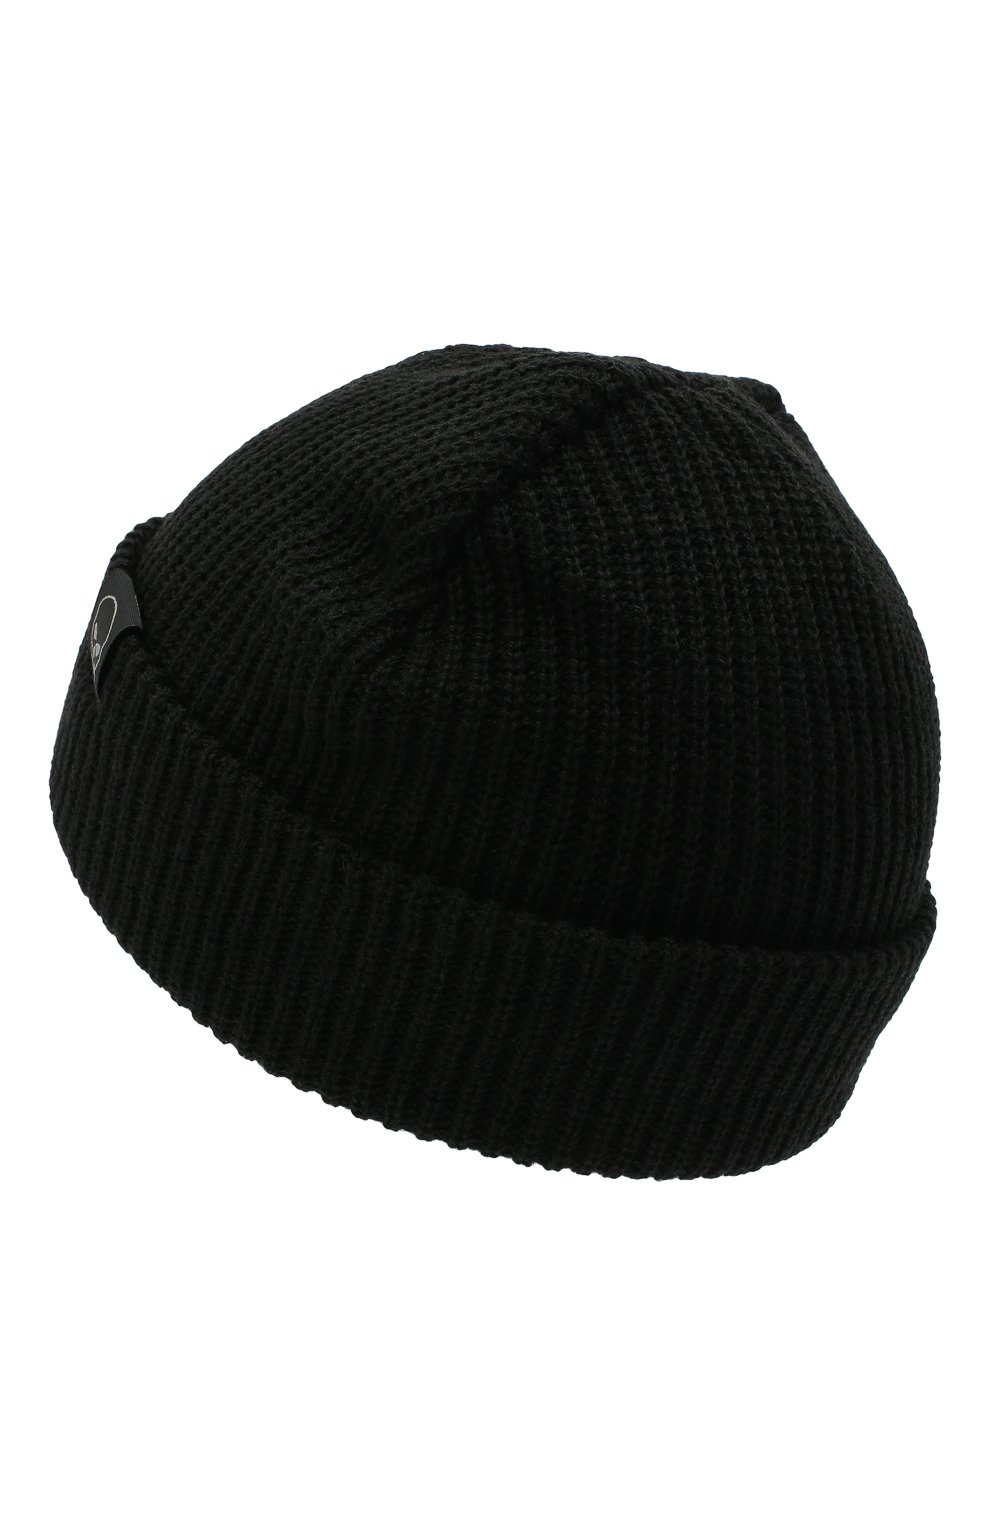 Мужская шапка HARLEY-DAVIDSON черного цвета, арт. 97601-21VM | Фото 2 (Материал: Текстиль, Синтетический материал; Кросс-КТ: Трикотаж)